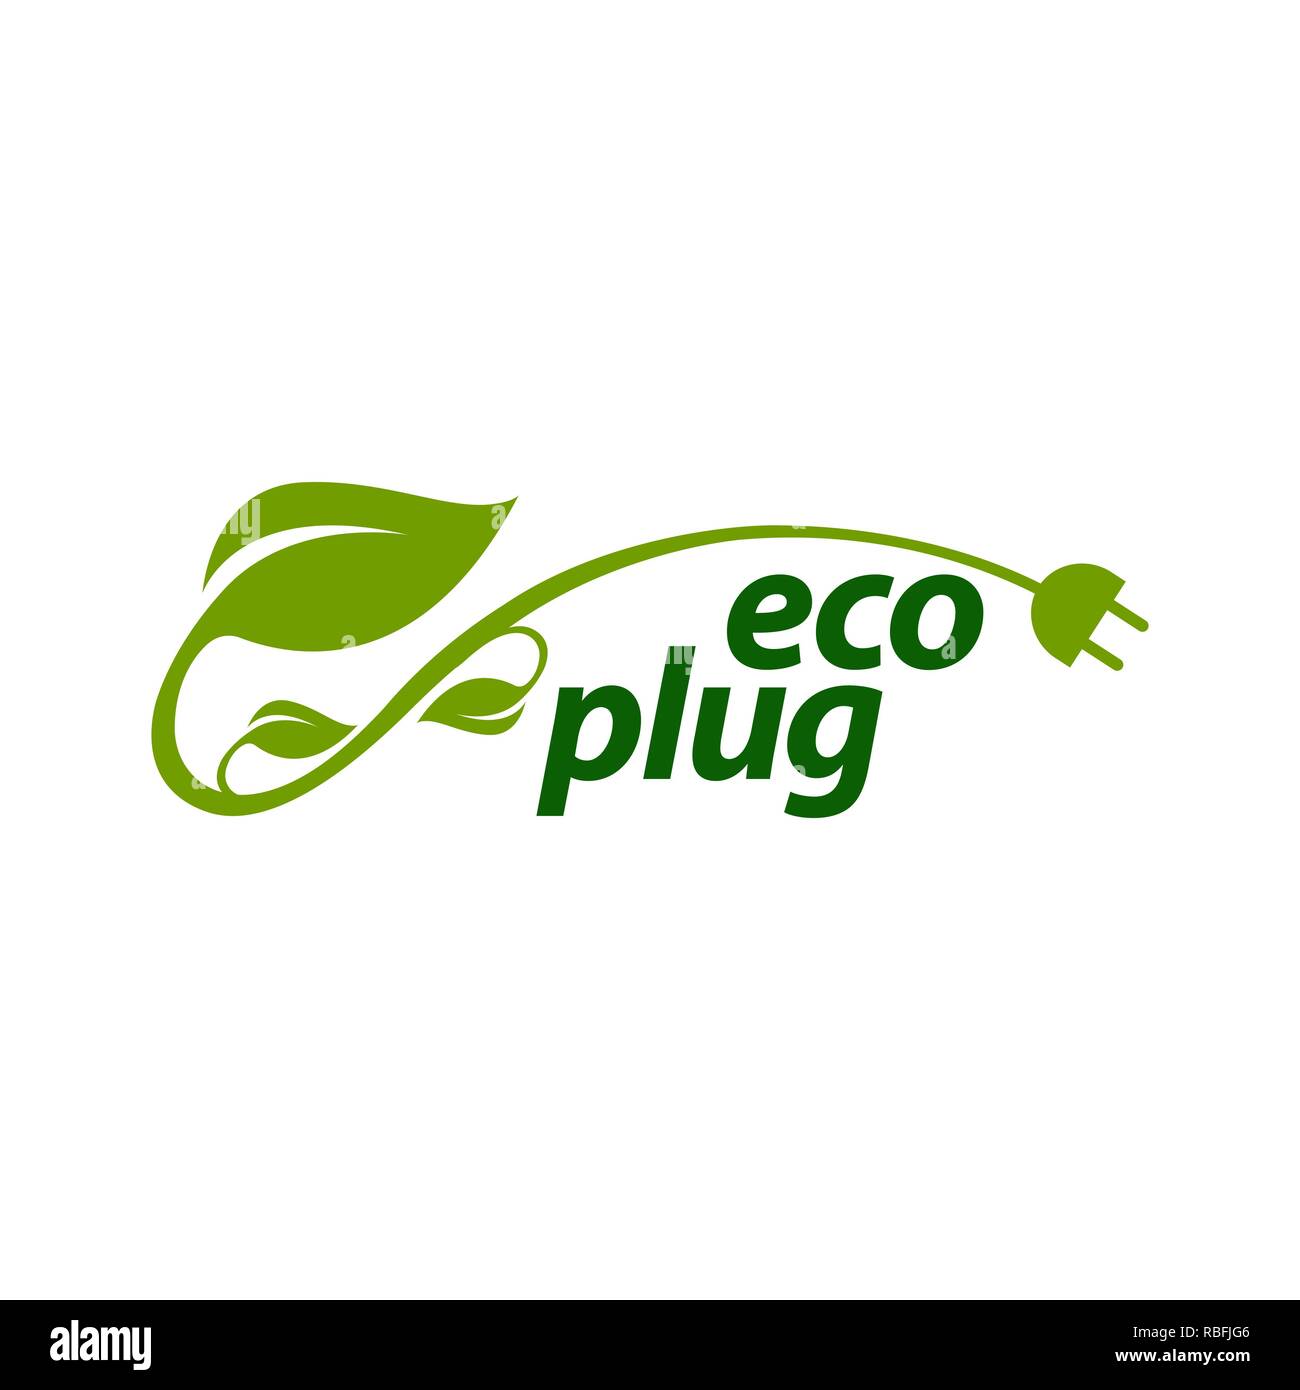 eco plug stem leaves with electric plug icon logo concept design template idea Stock Vector